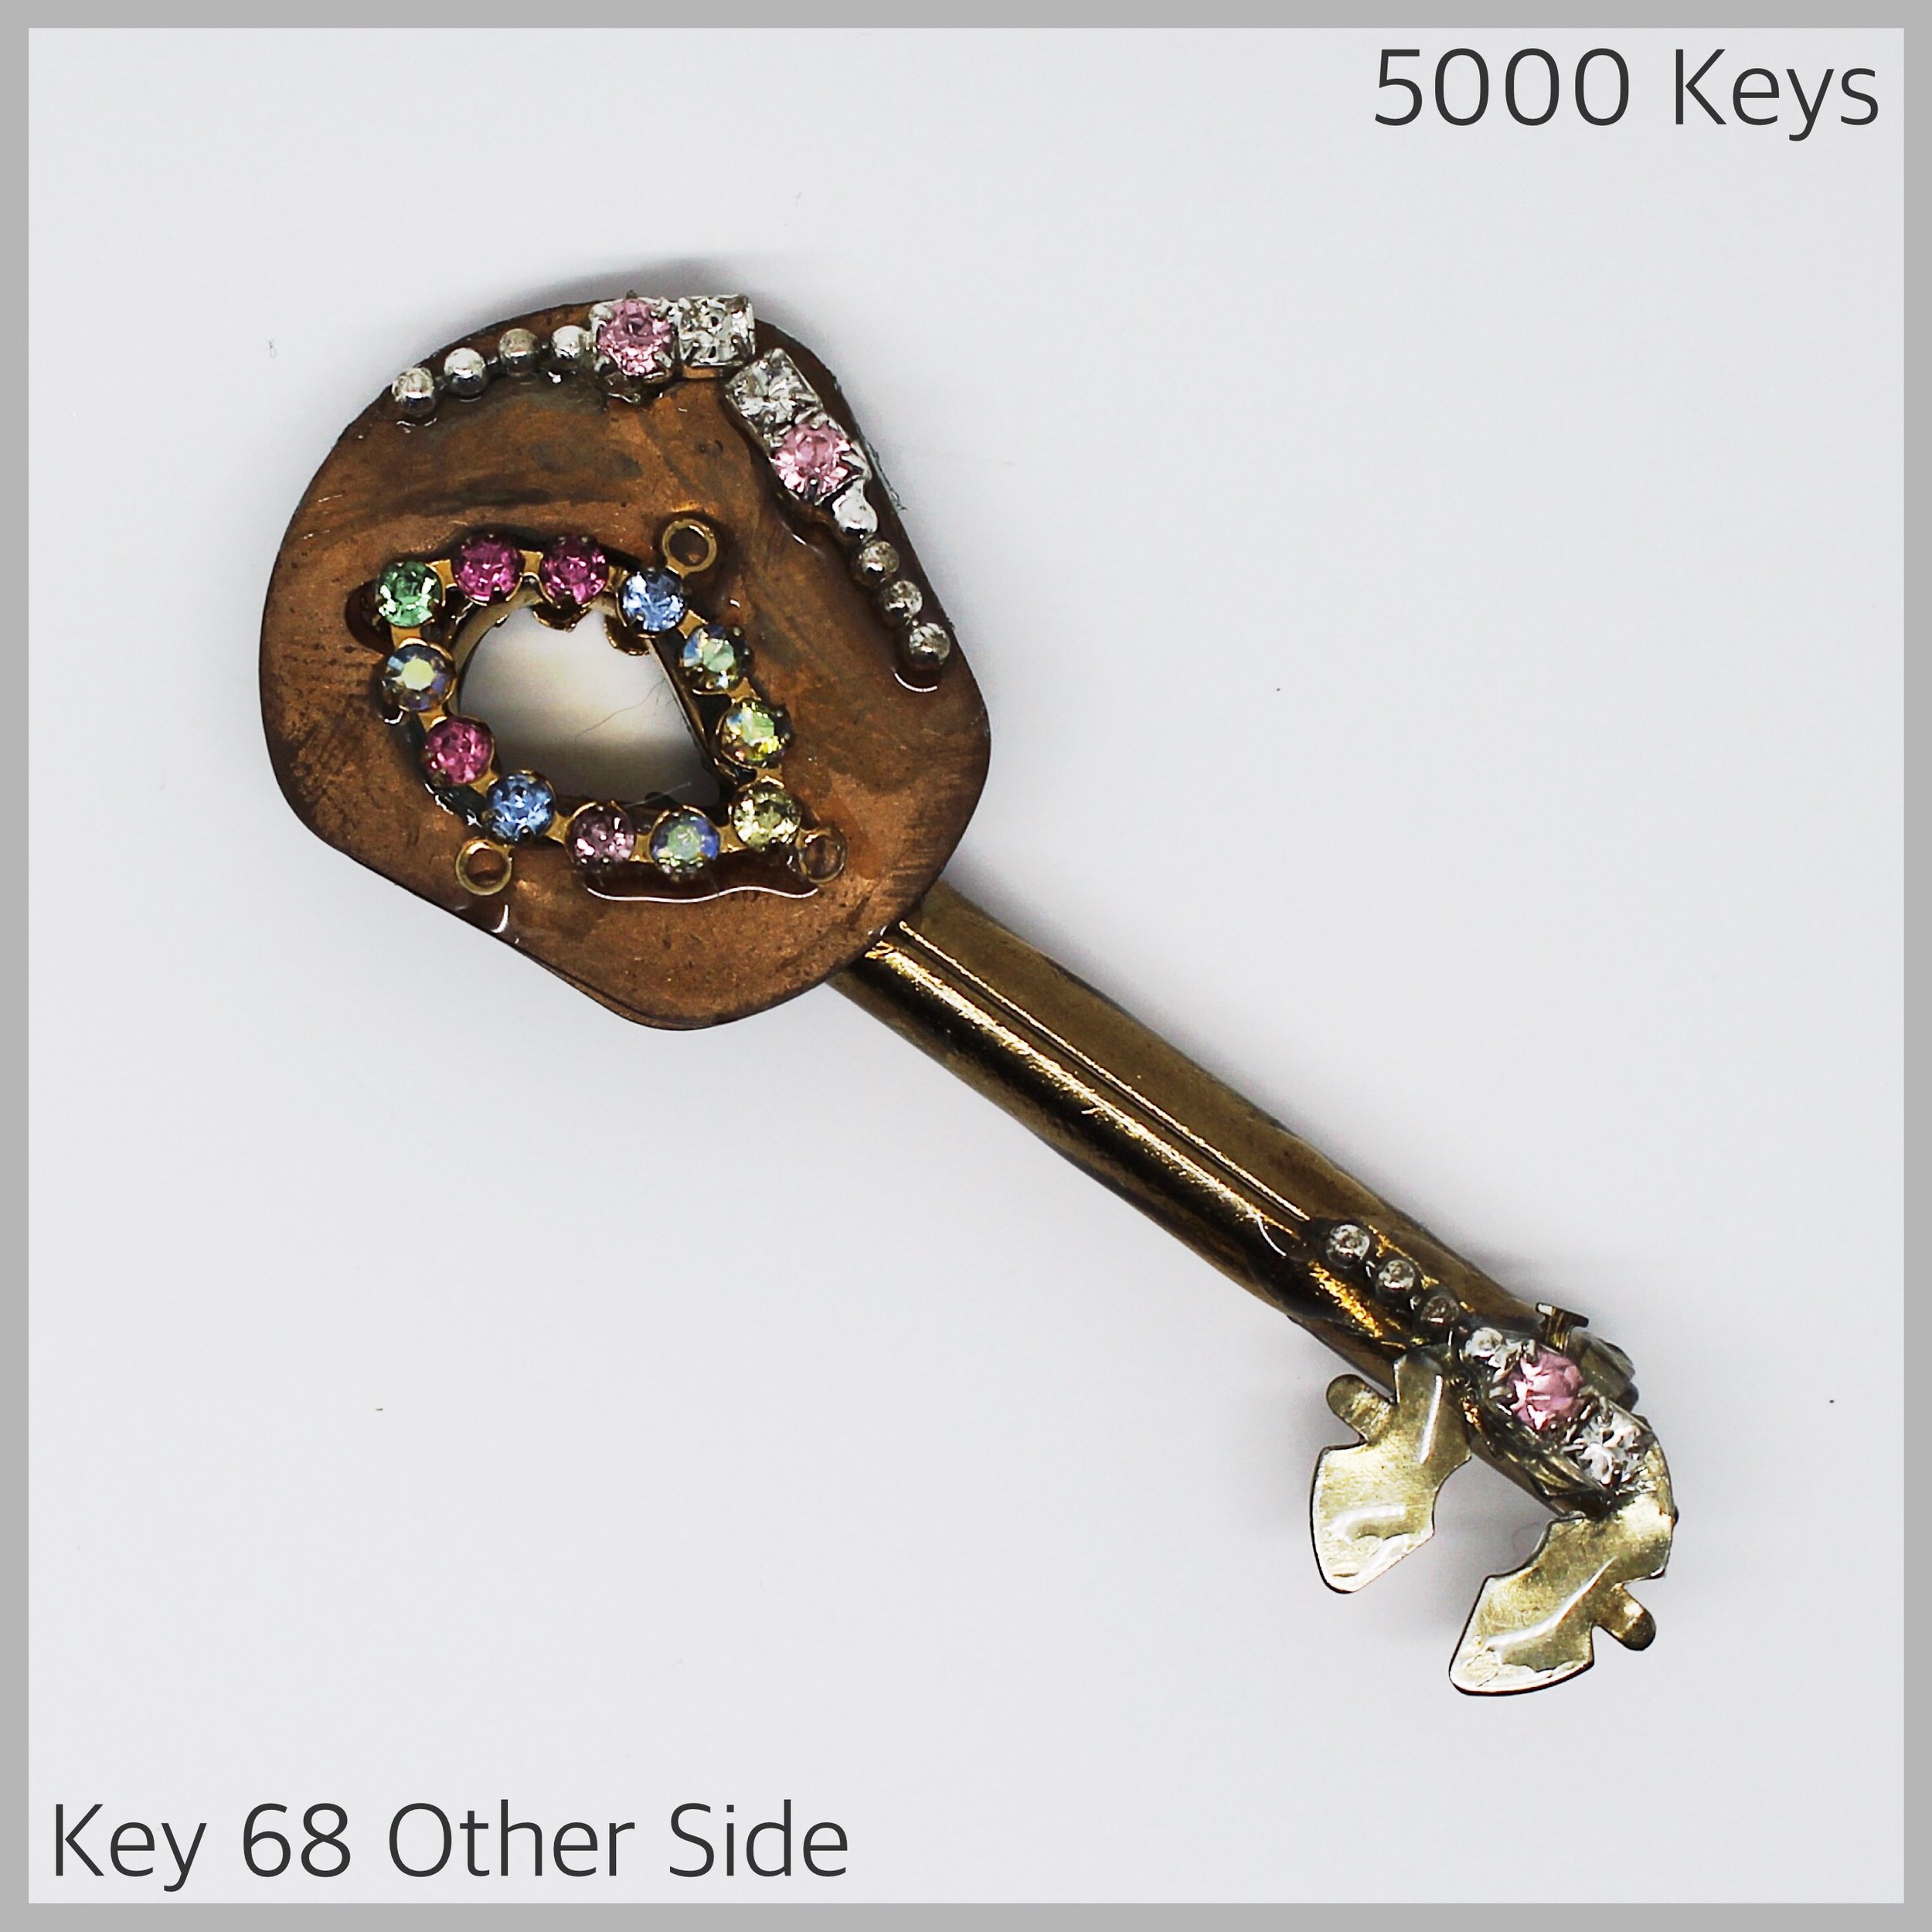 Key 68 other side - 1.JPG